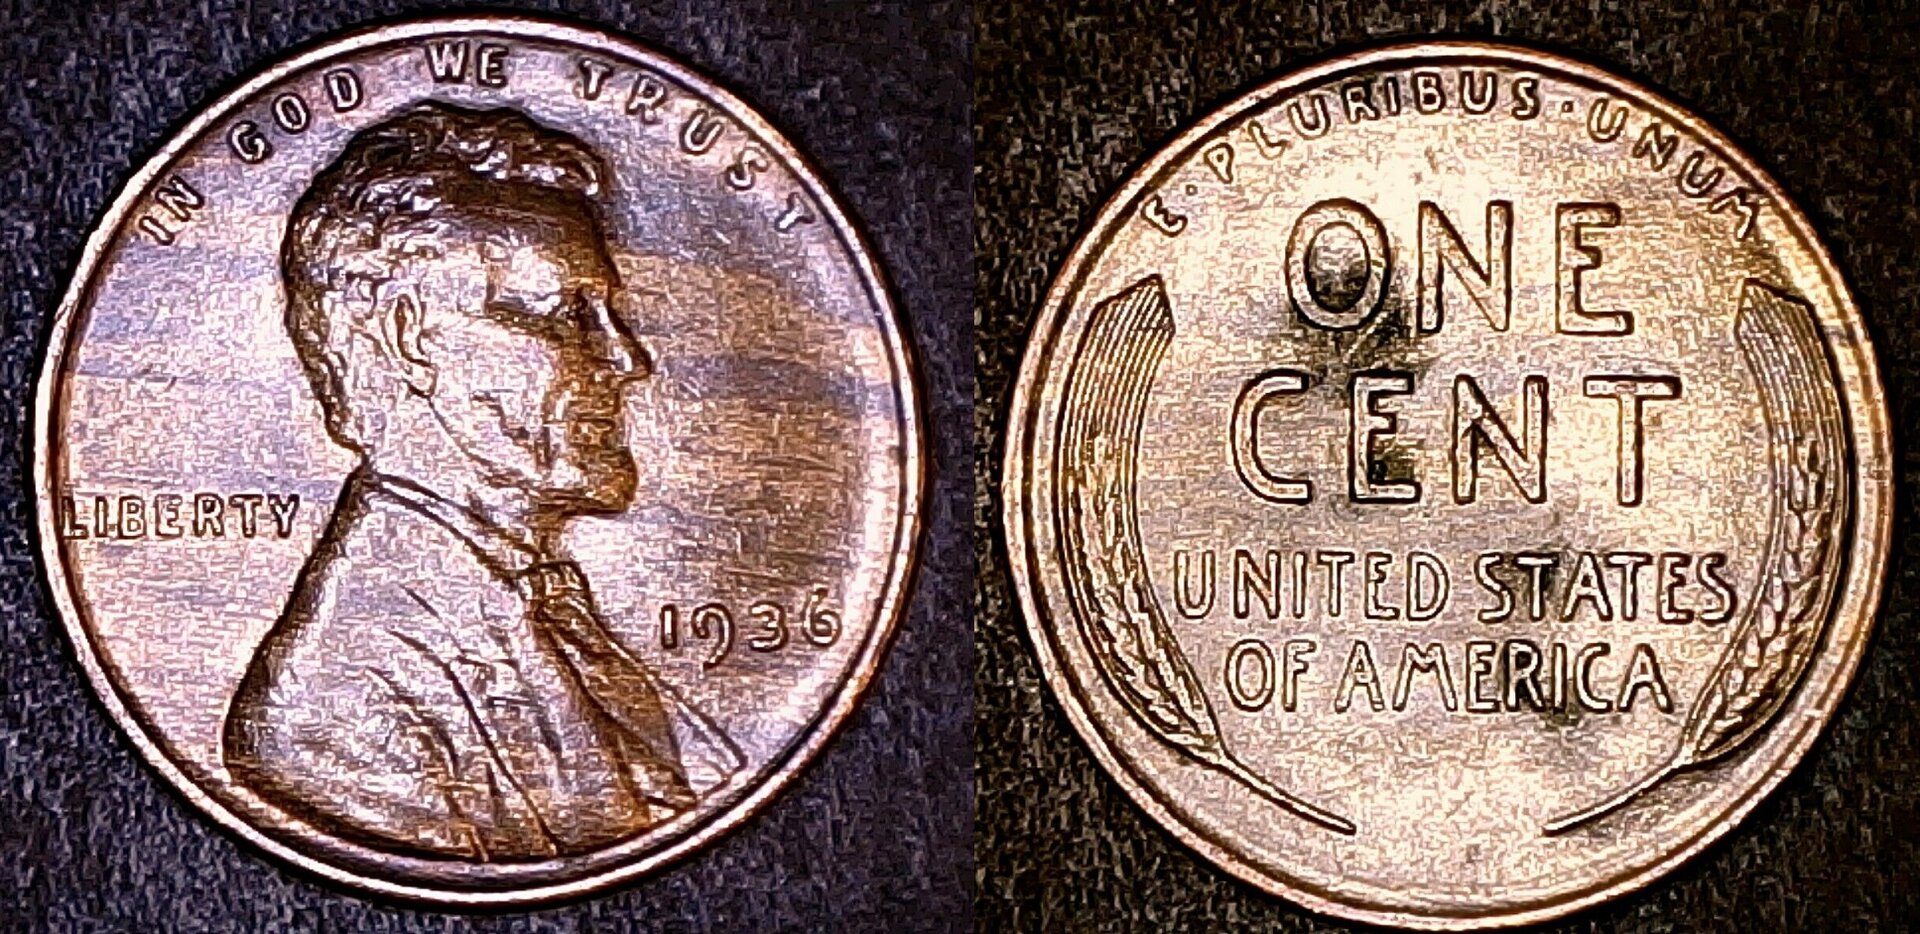 1936 Lincoln Mint Error Beautiful High Grade Mixed Alloy.jpg